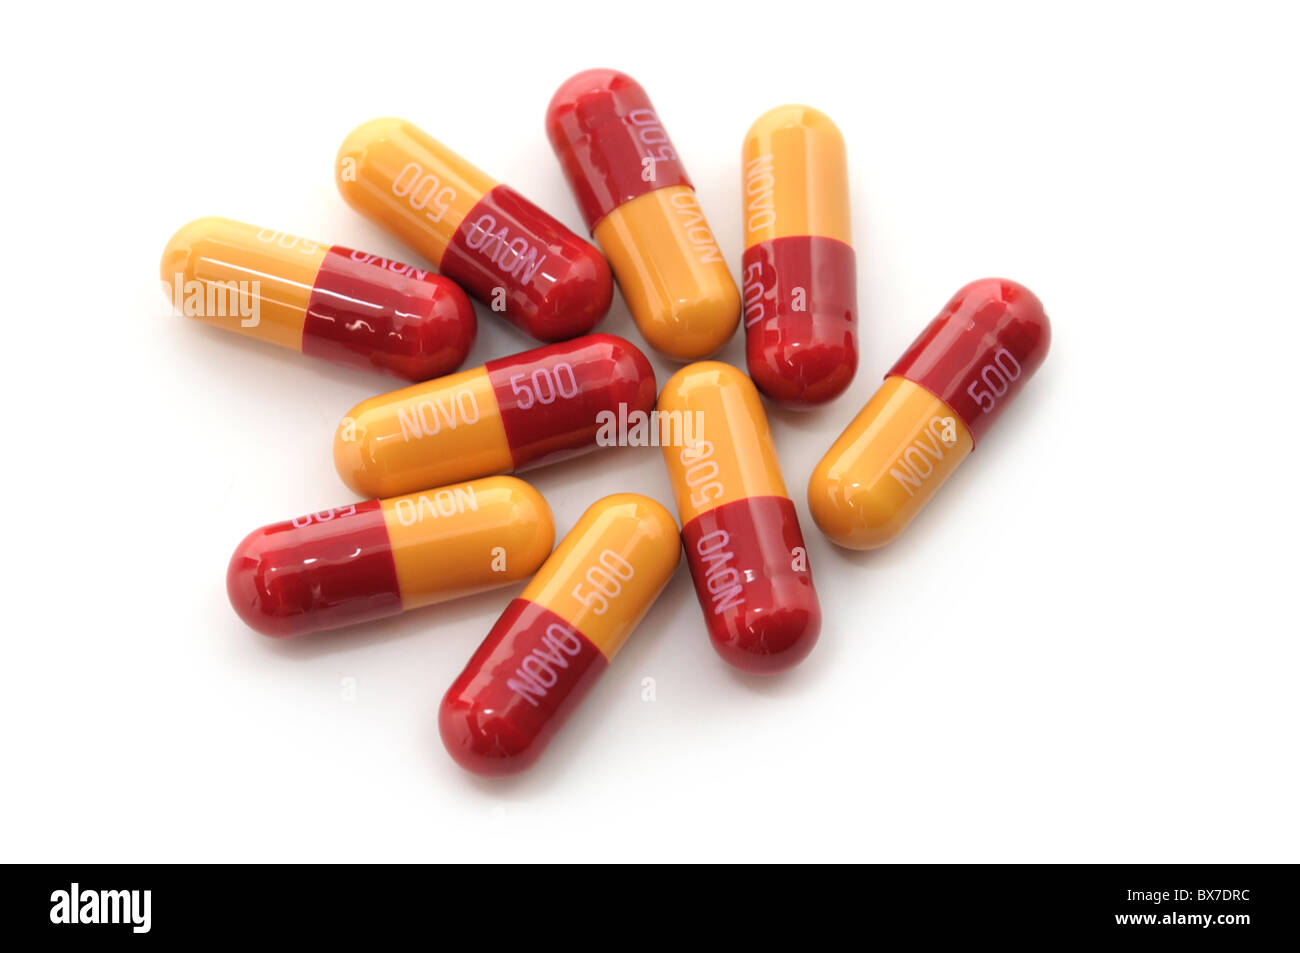 Capsules antibiotiques (amoxicilline, 500mg) Banque D'Images